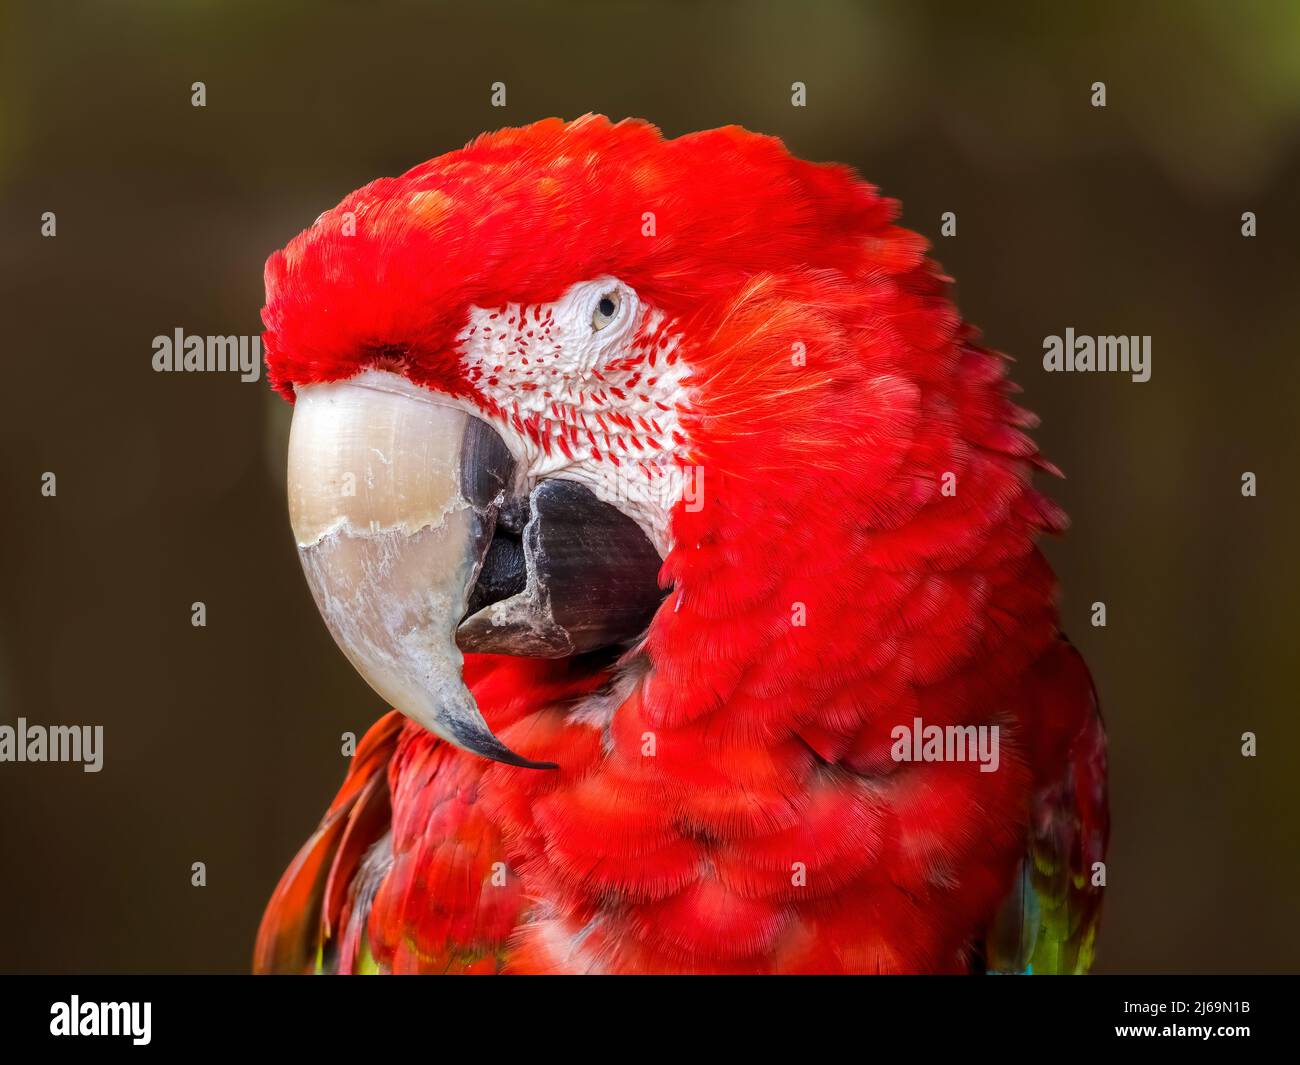 Closeup portrait of a Scarlet Macaw Stock Photo